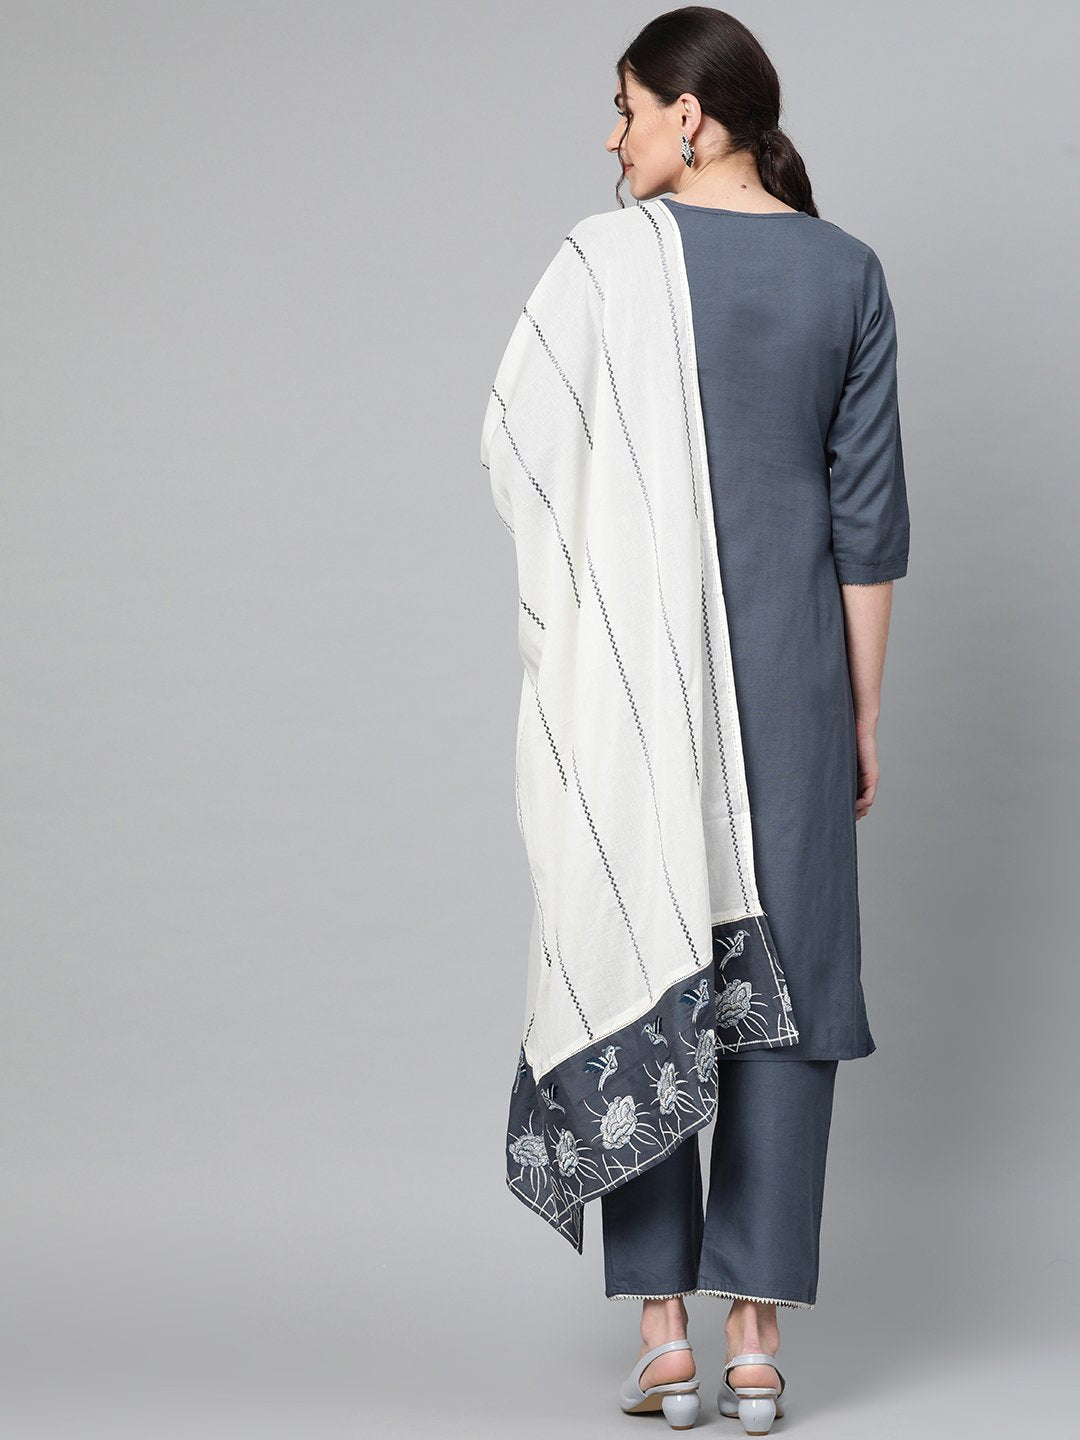 Ishin Women's Cotton Grey Embroidered A-Line Kurta Palazzo Dupatta Set